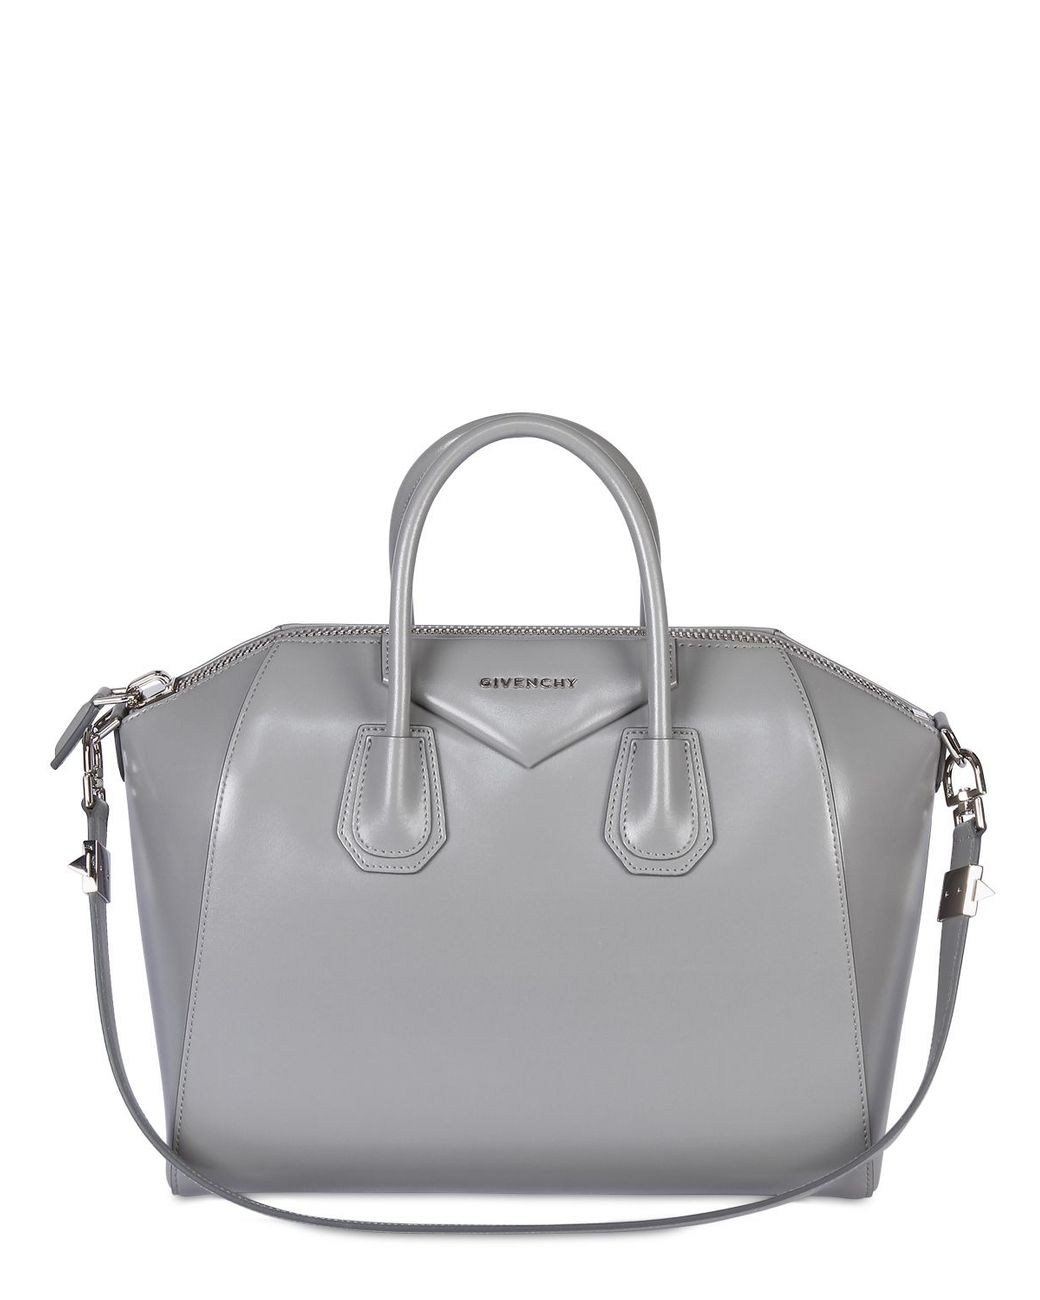 Givenchy Medium Antigona Shiny Smooth Leather Bag in Gray | Lyst